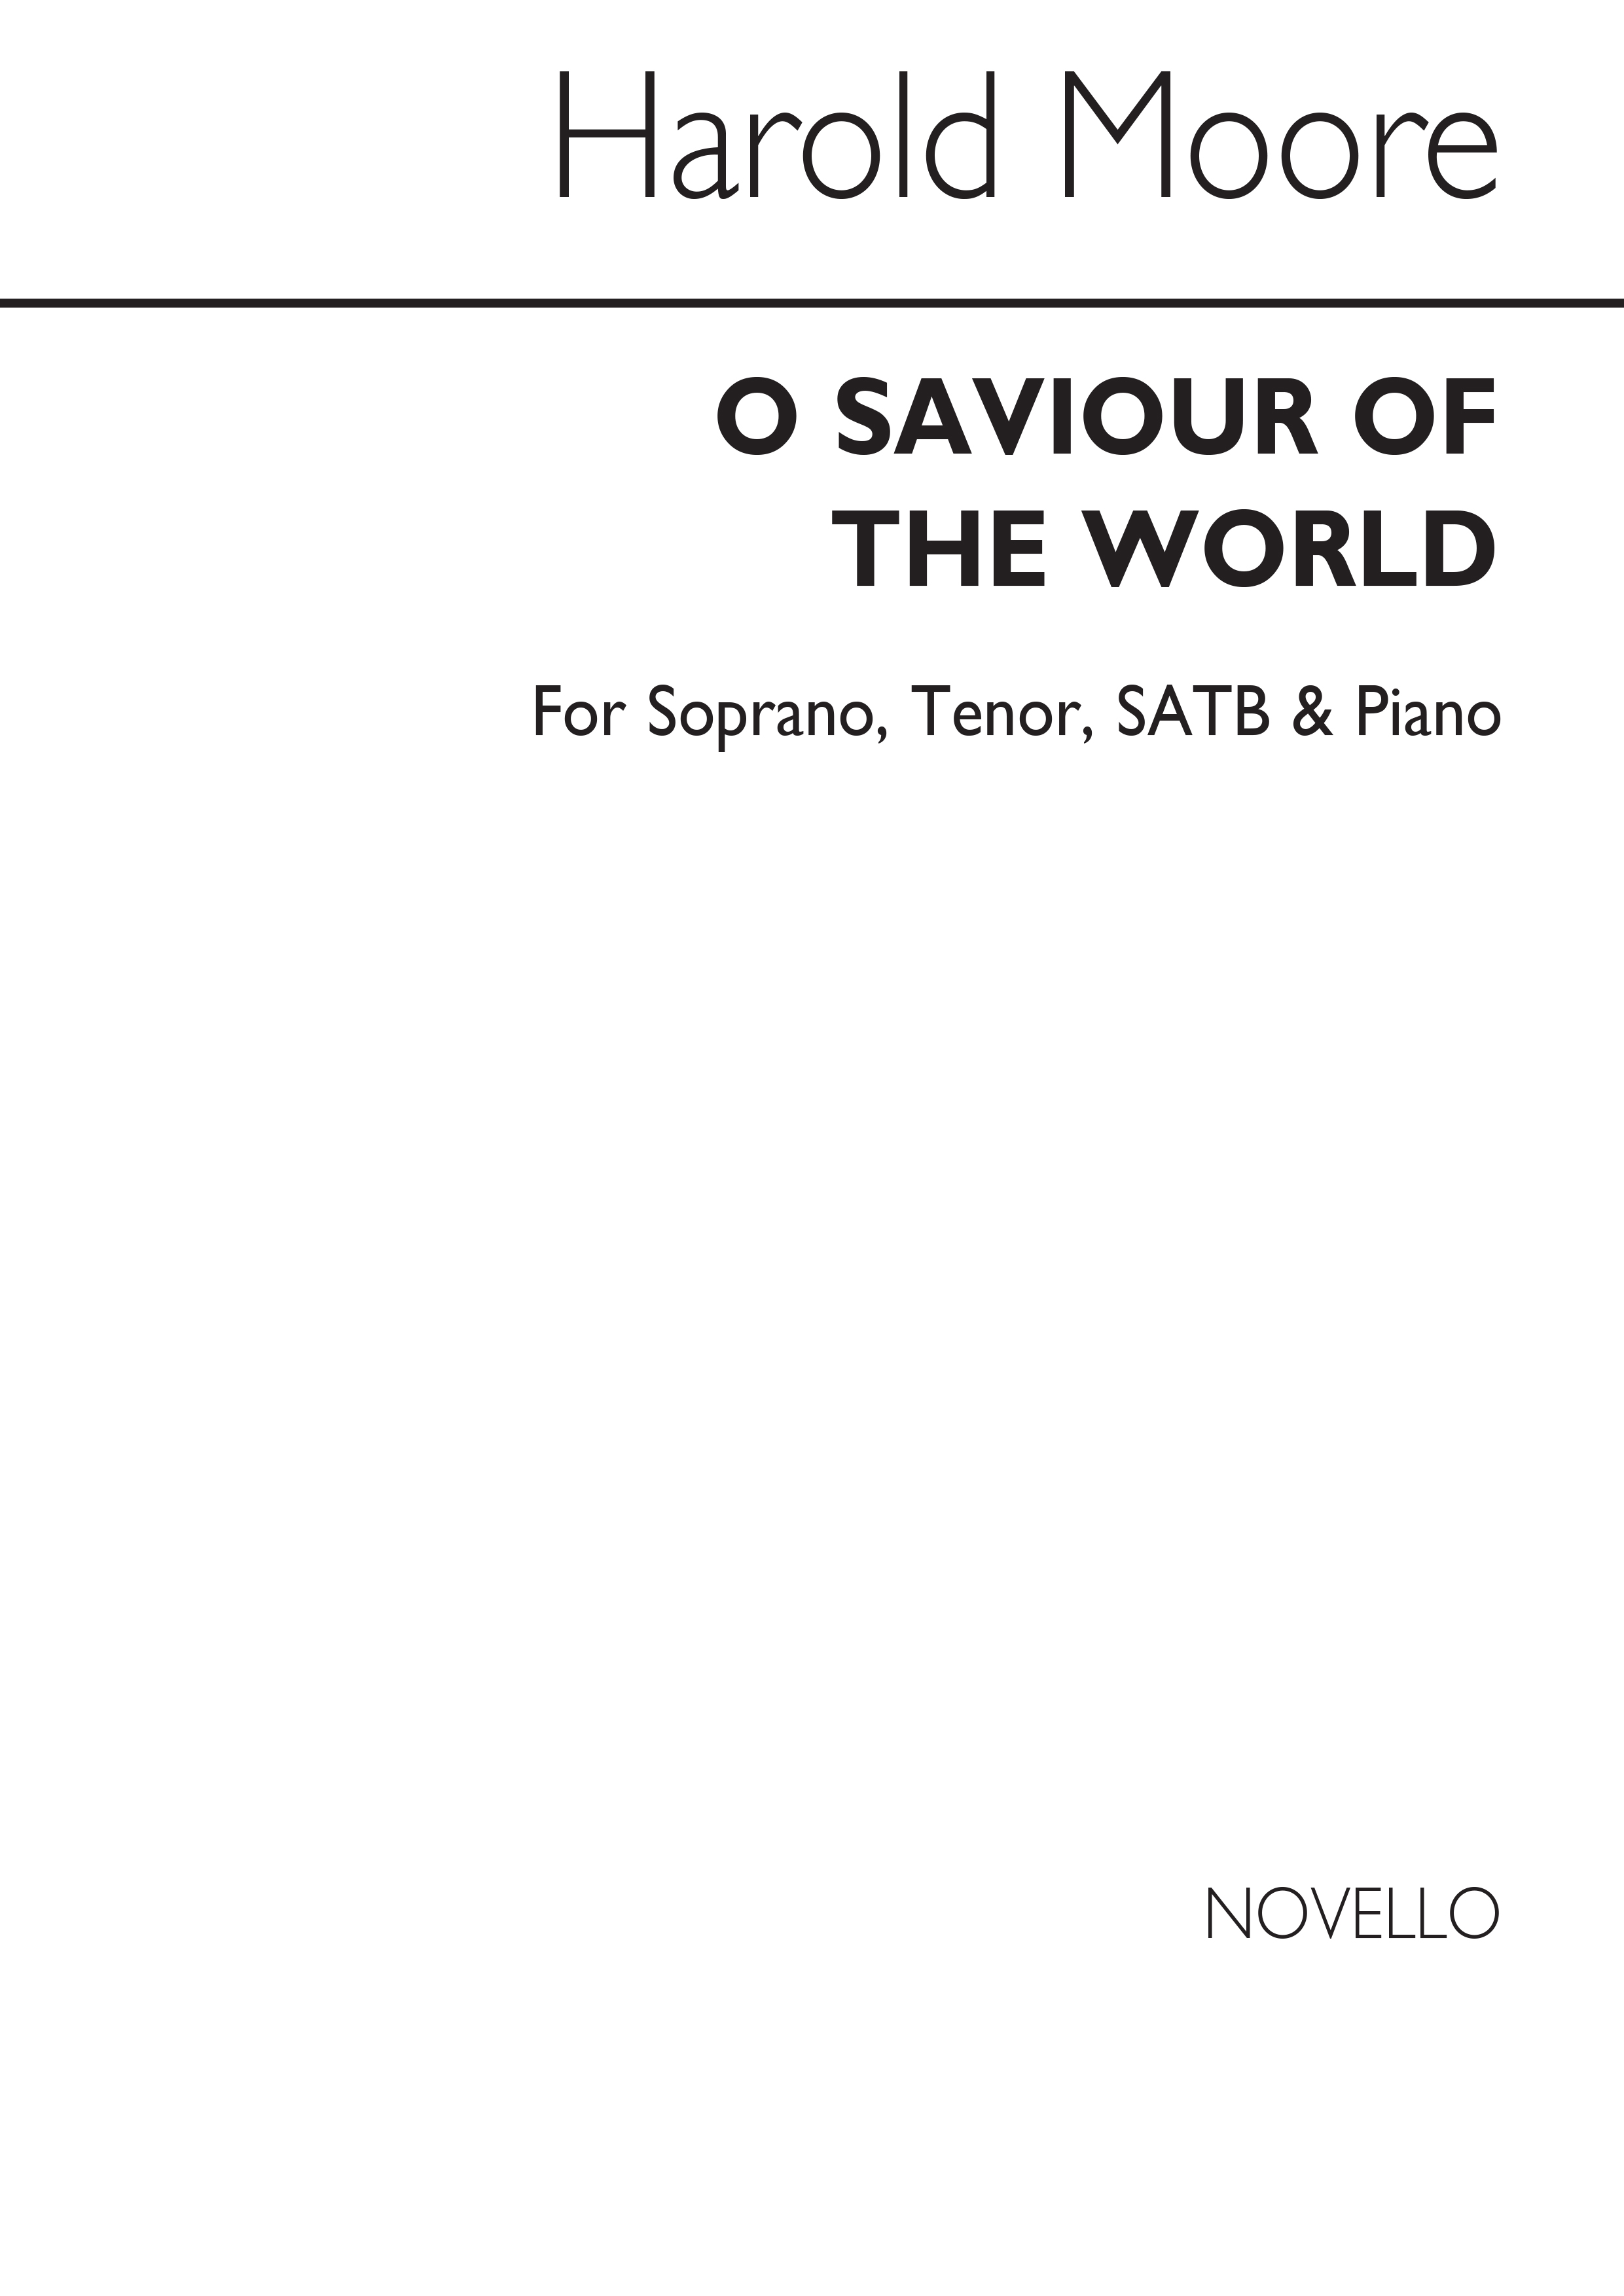 Harold Moore: O Saviour Of The World